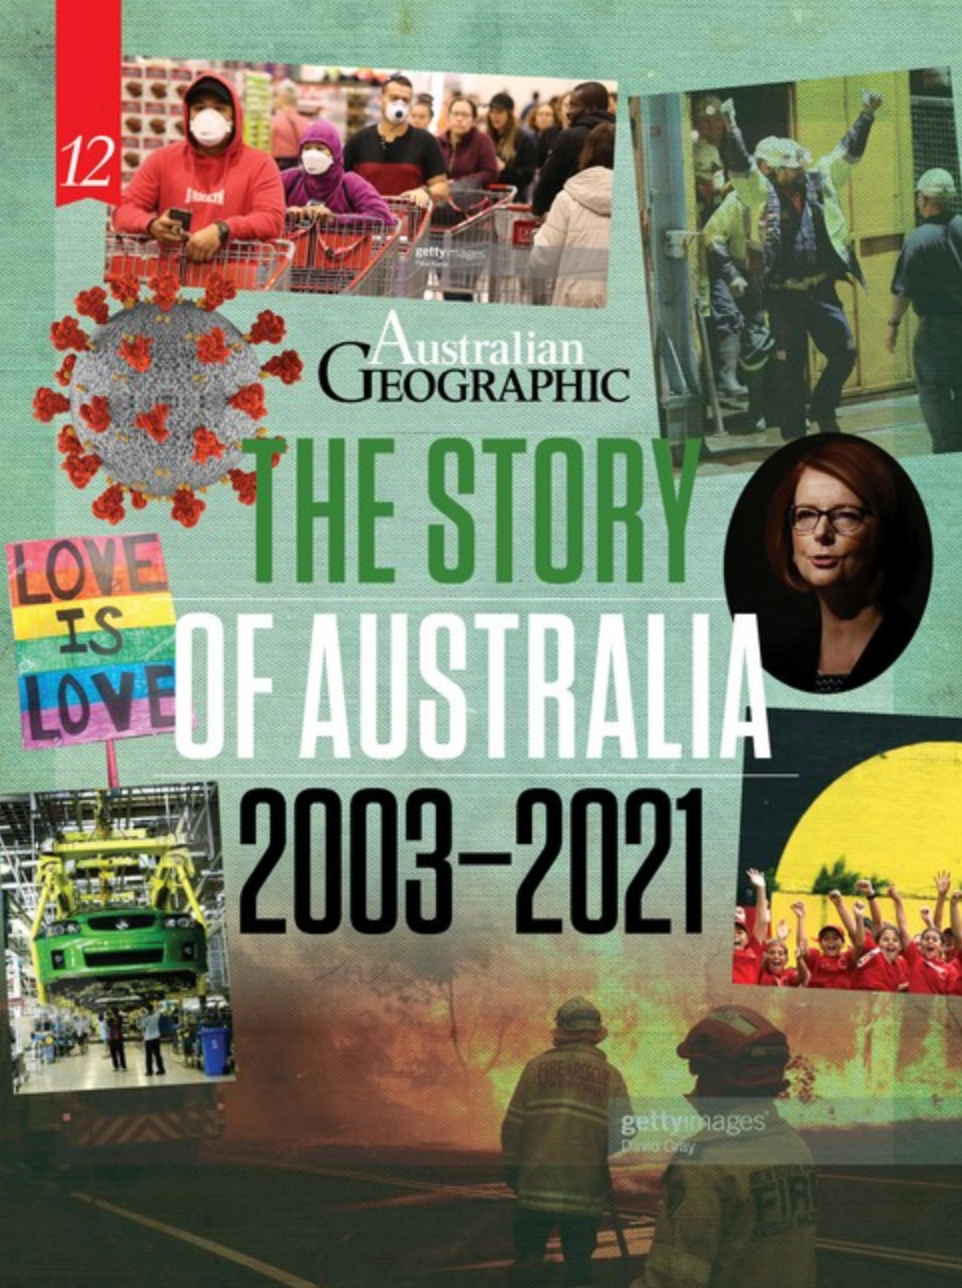 The Story of Australia: 2003-2021